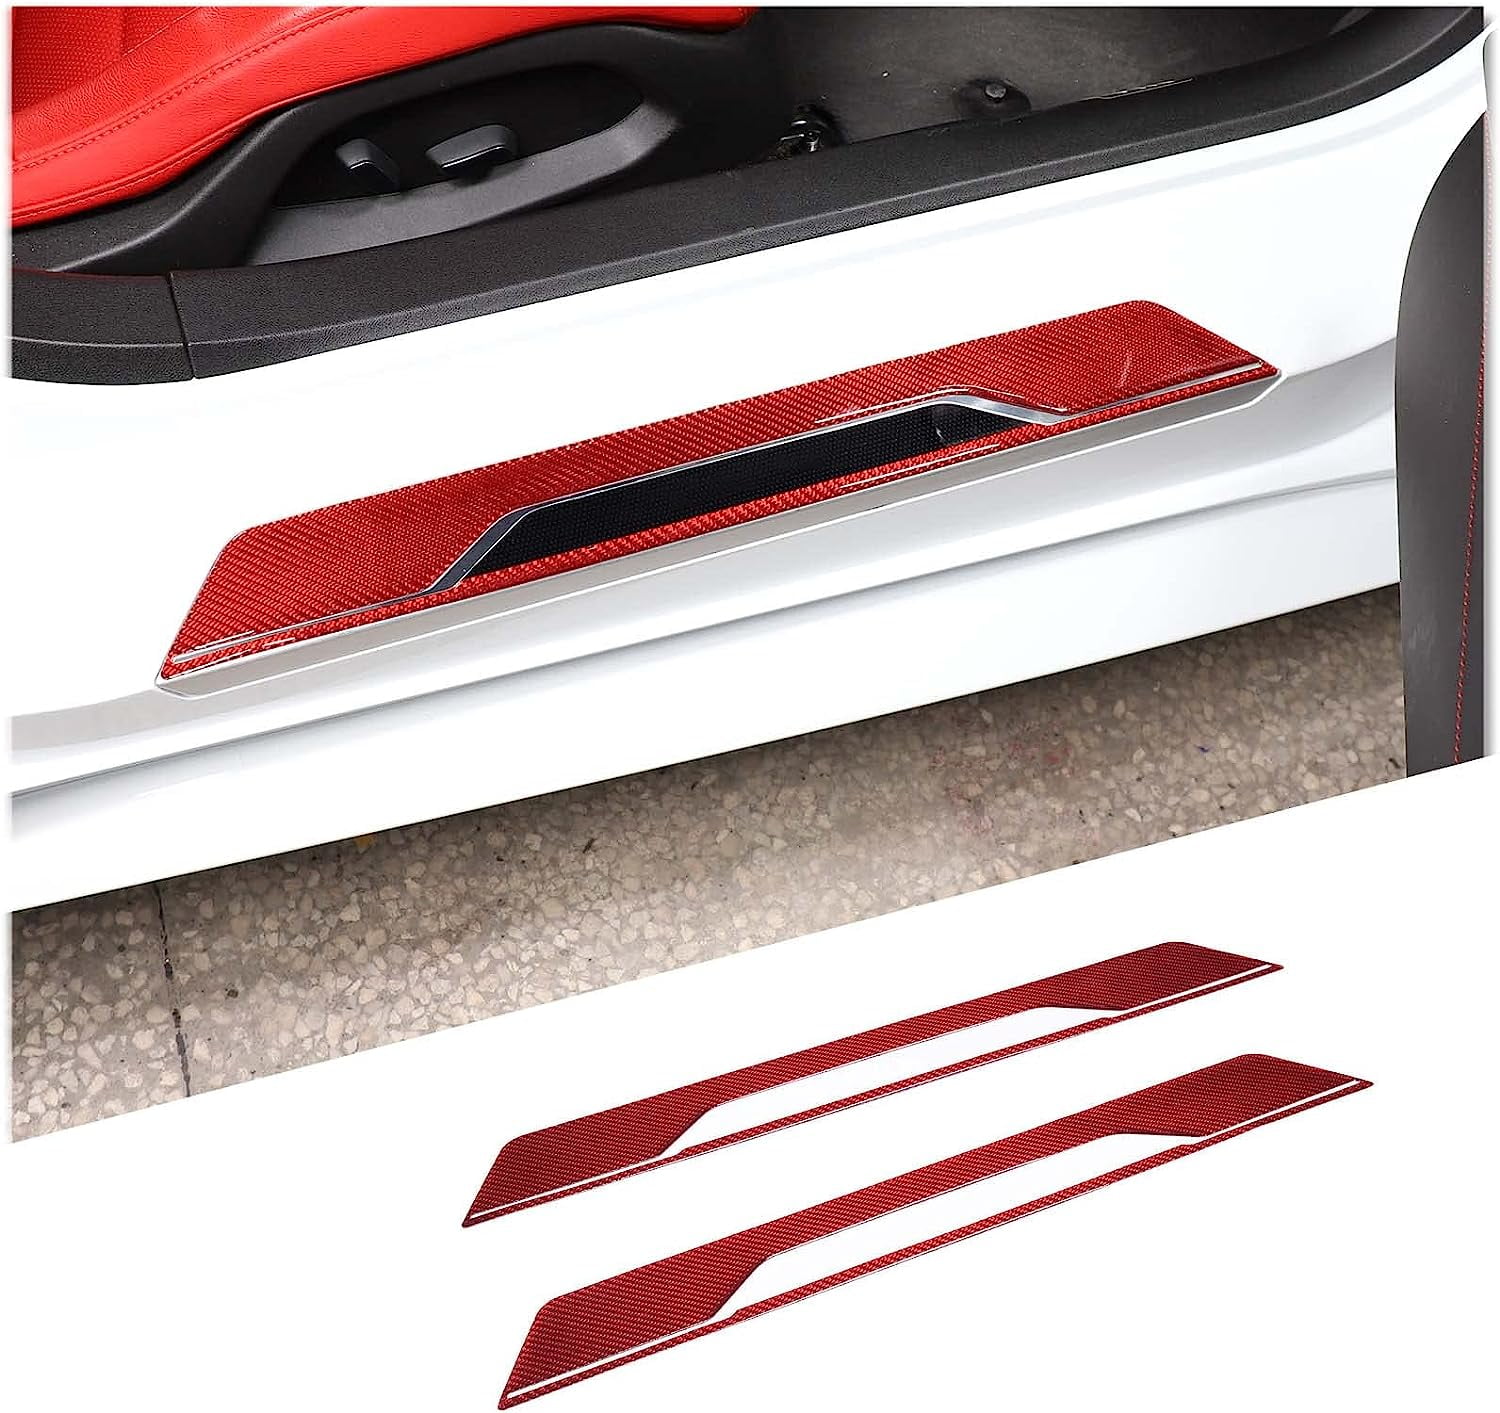 NEW Car Accessories Door Sill Scuff Plate Protector Guard Carbon Fiber  Stickers